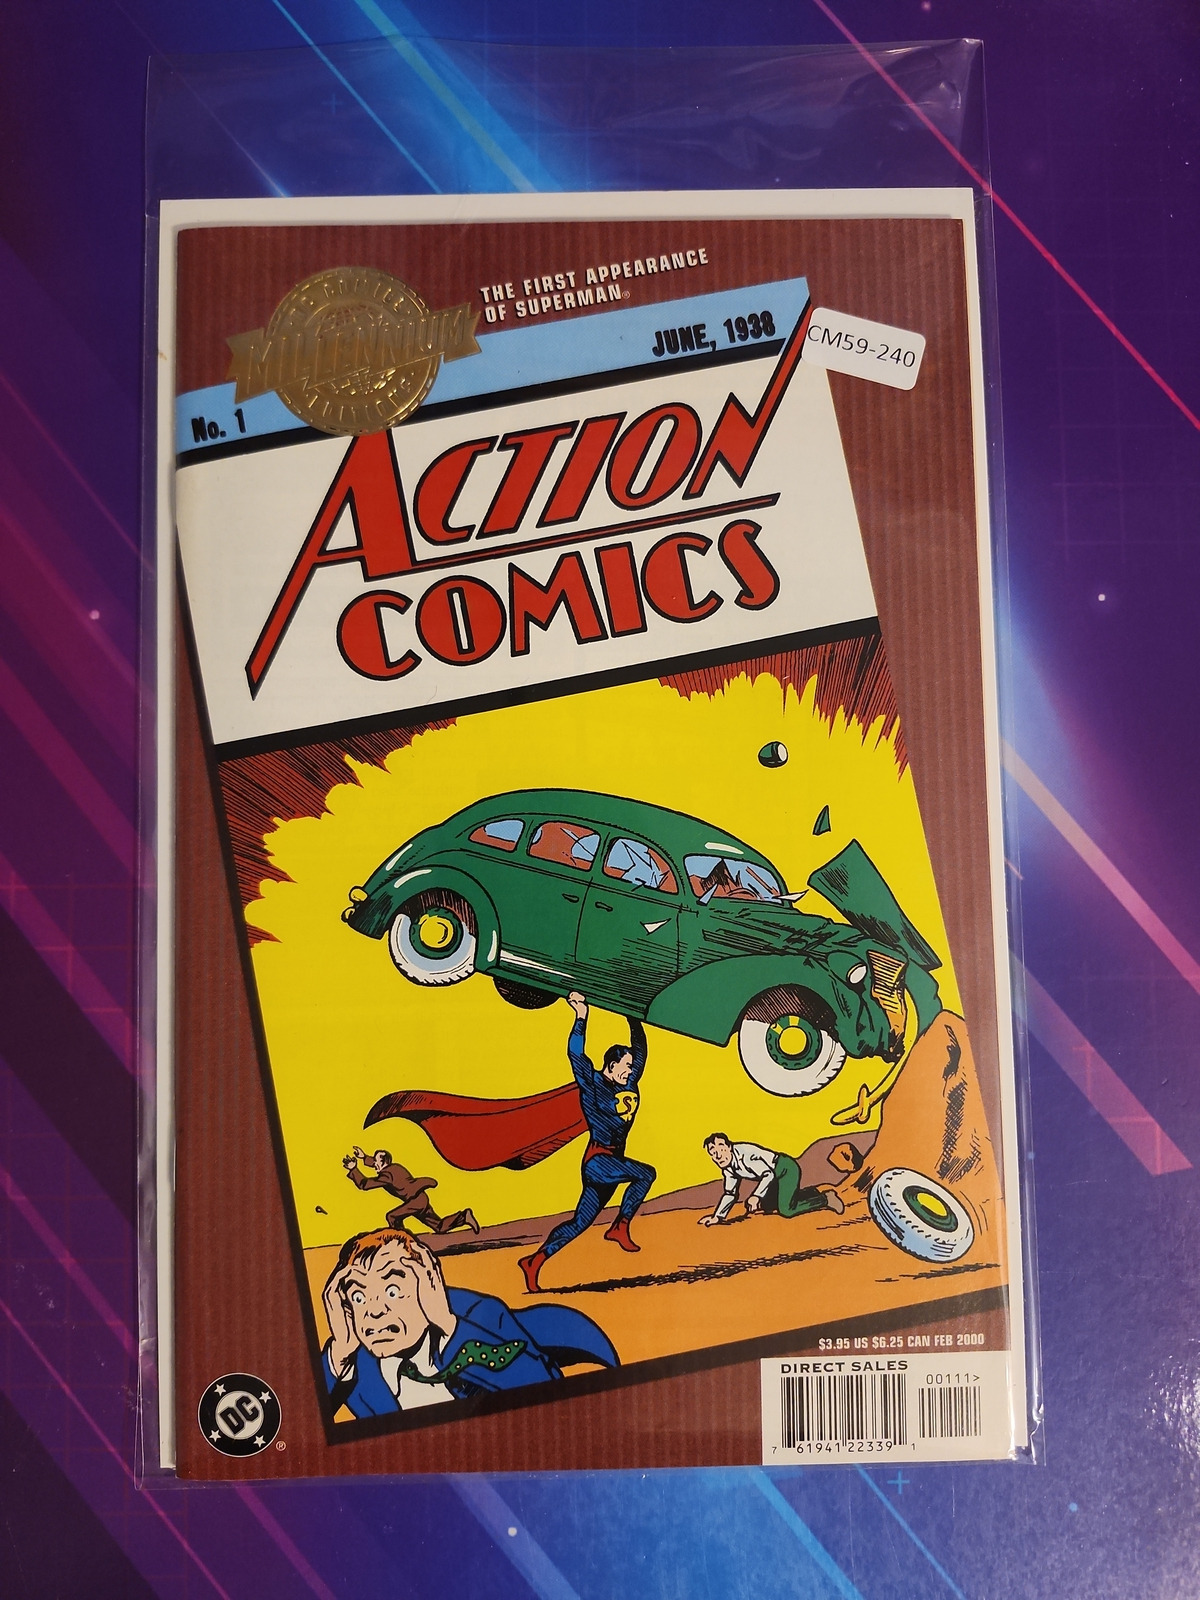 MILLENNIUM EDITION: ACTION COMICS #1 ONE-SHOT HIGH GRADE DC COMIC BOOK CM59-240